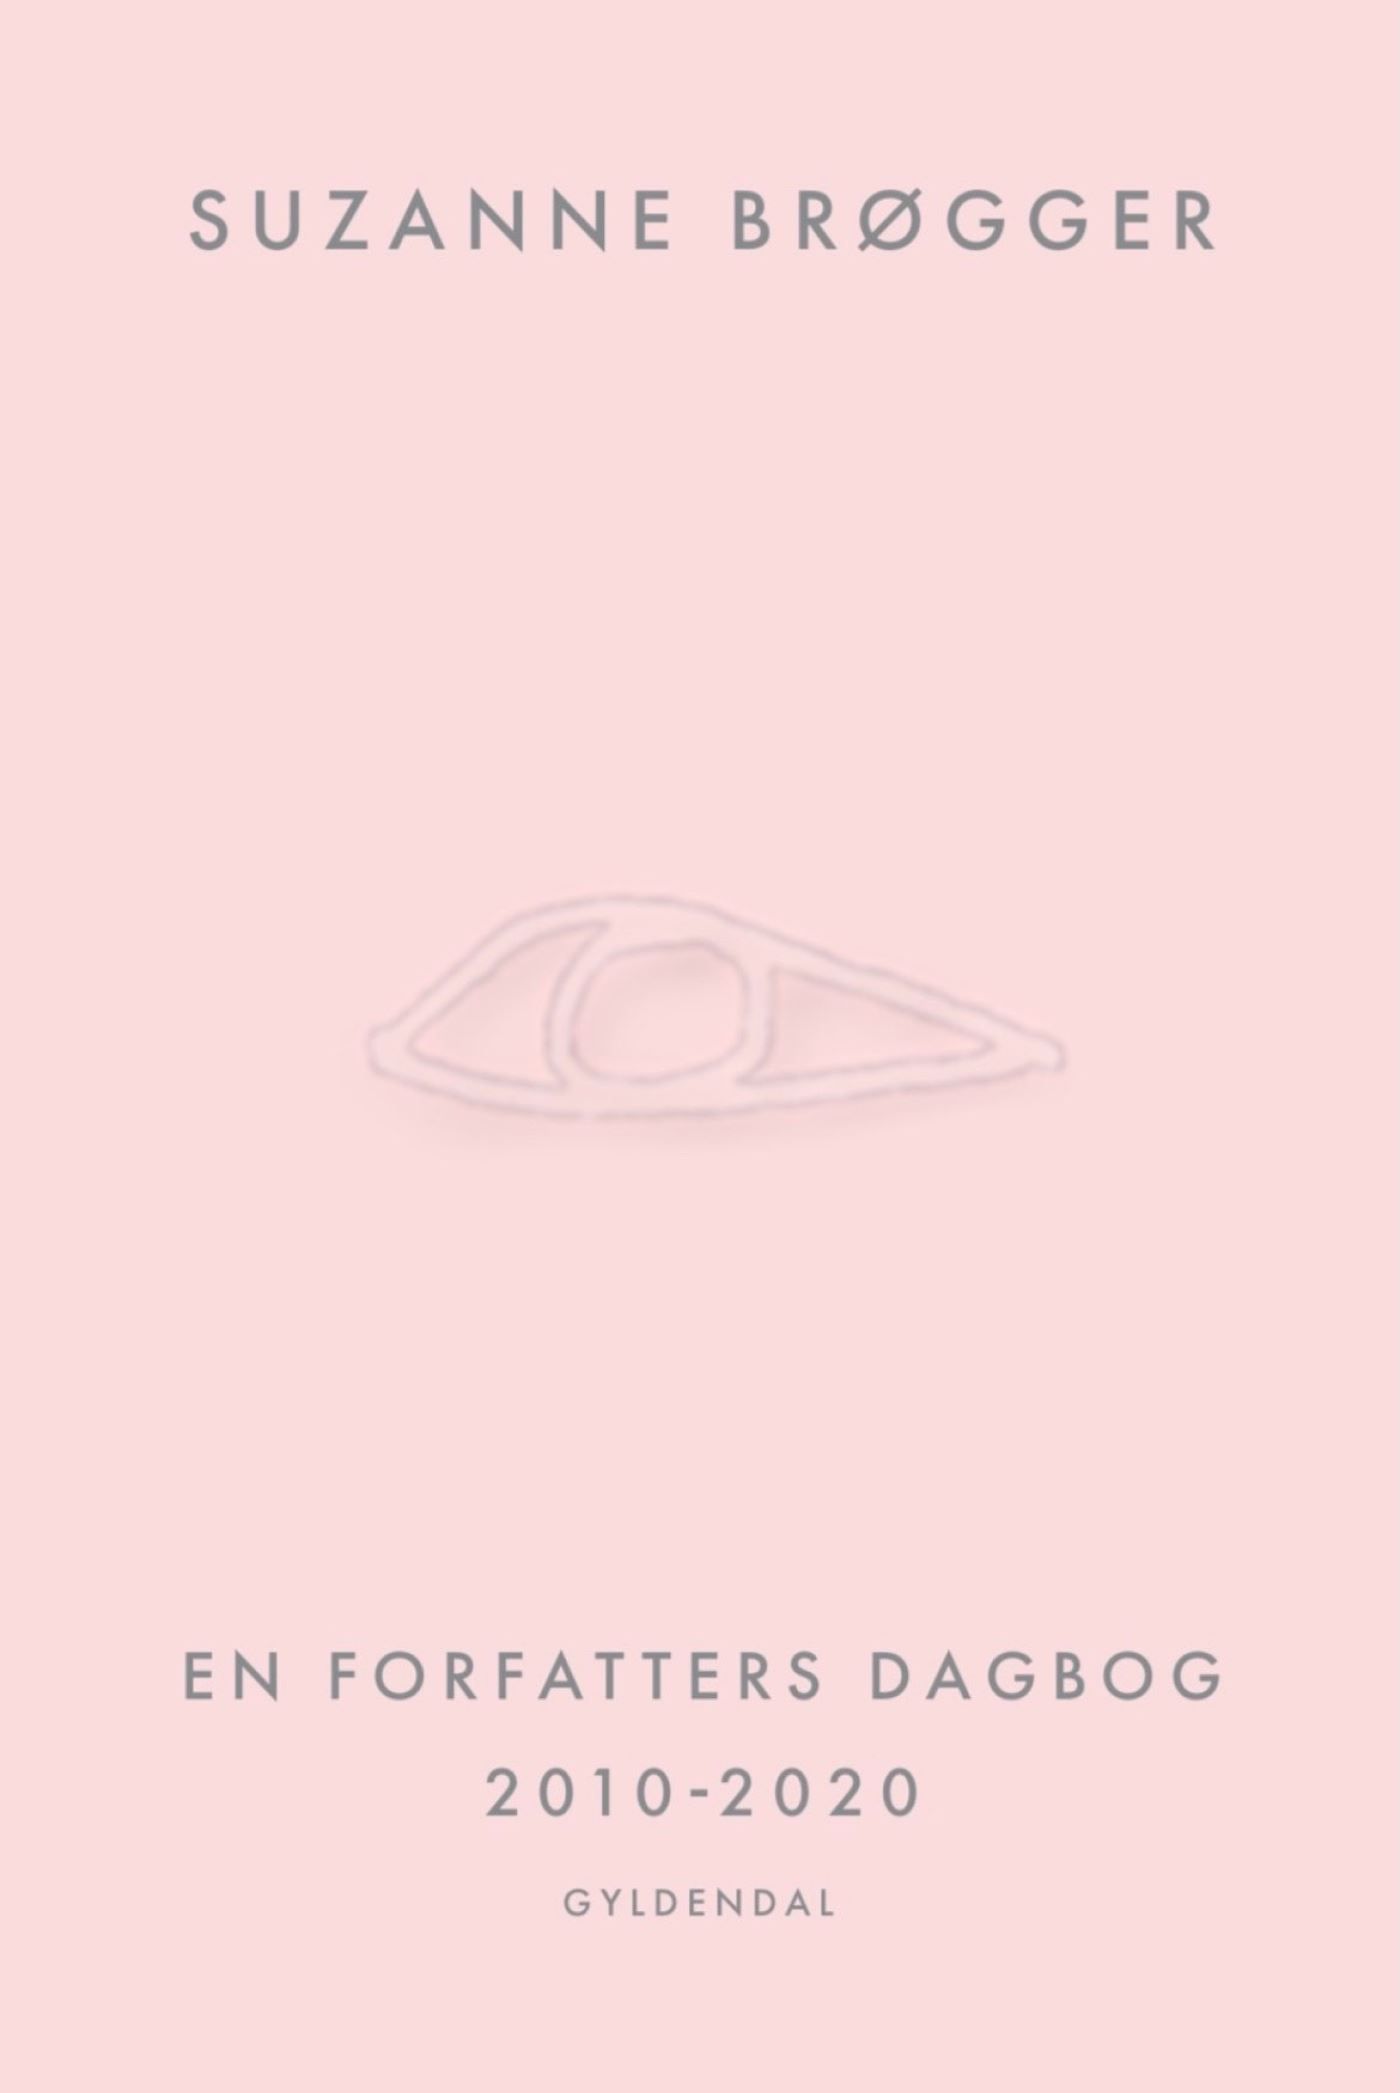 En forfatters dagbog 2010-2020, audiobook by Suzanne Brøgger